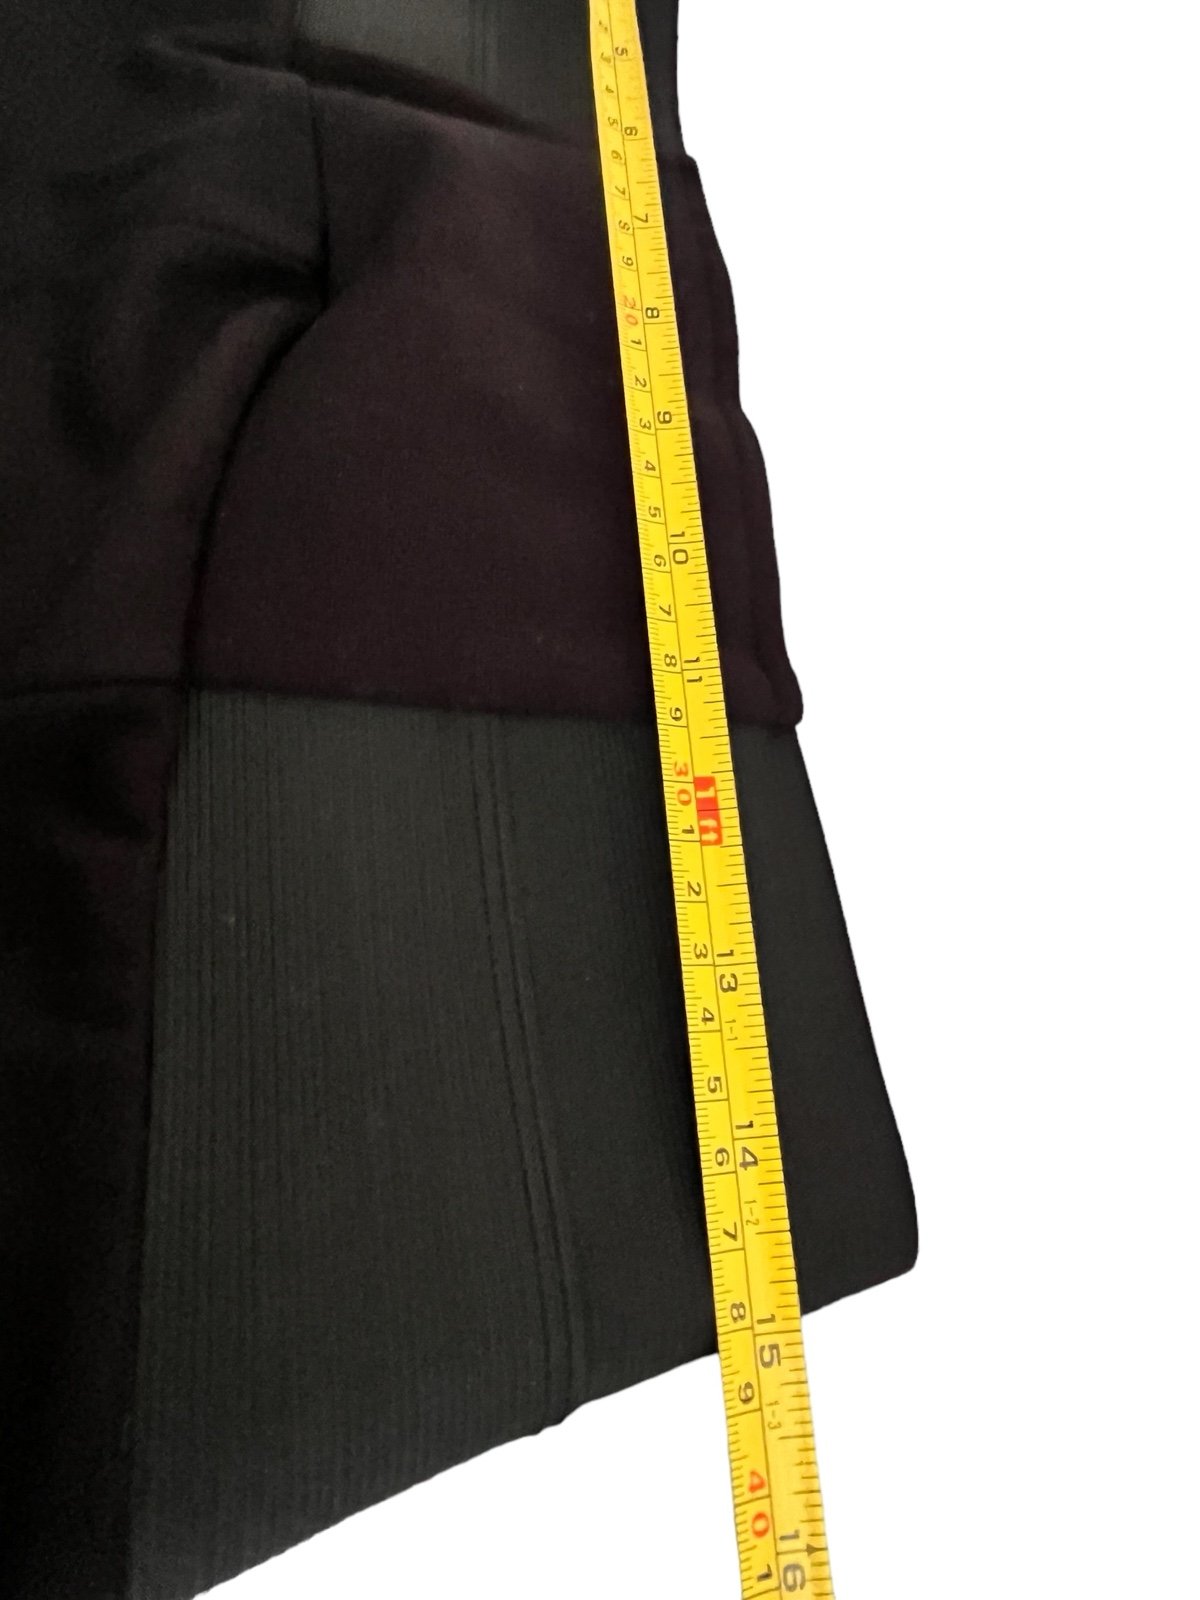 high discount Black Leggings with Vegan Leather Accents Size Medium mINu5x2iR on sale